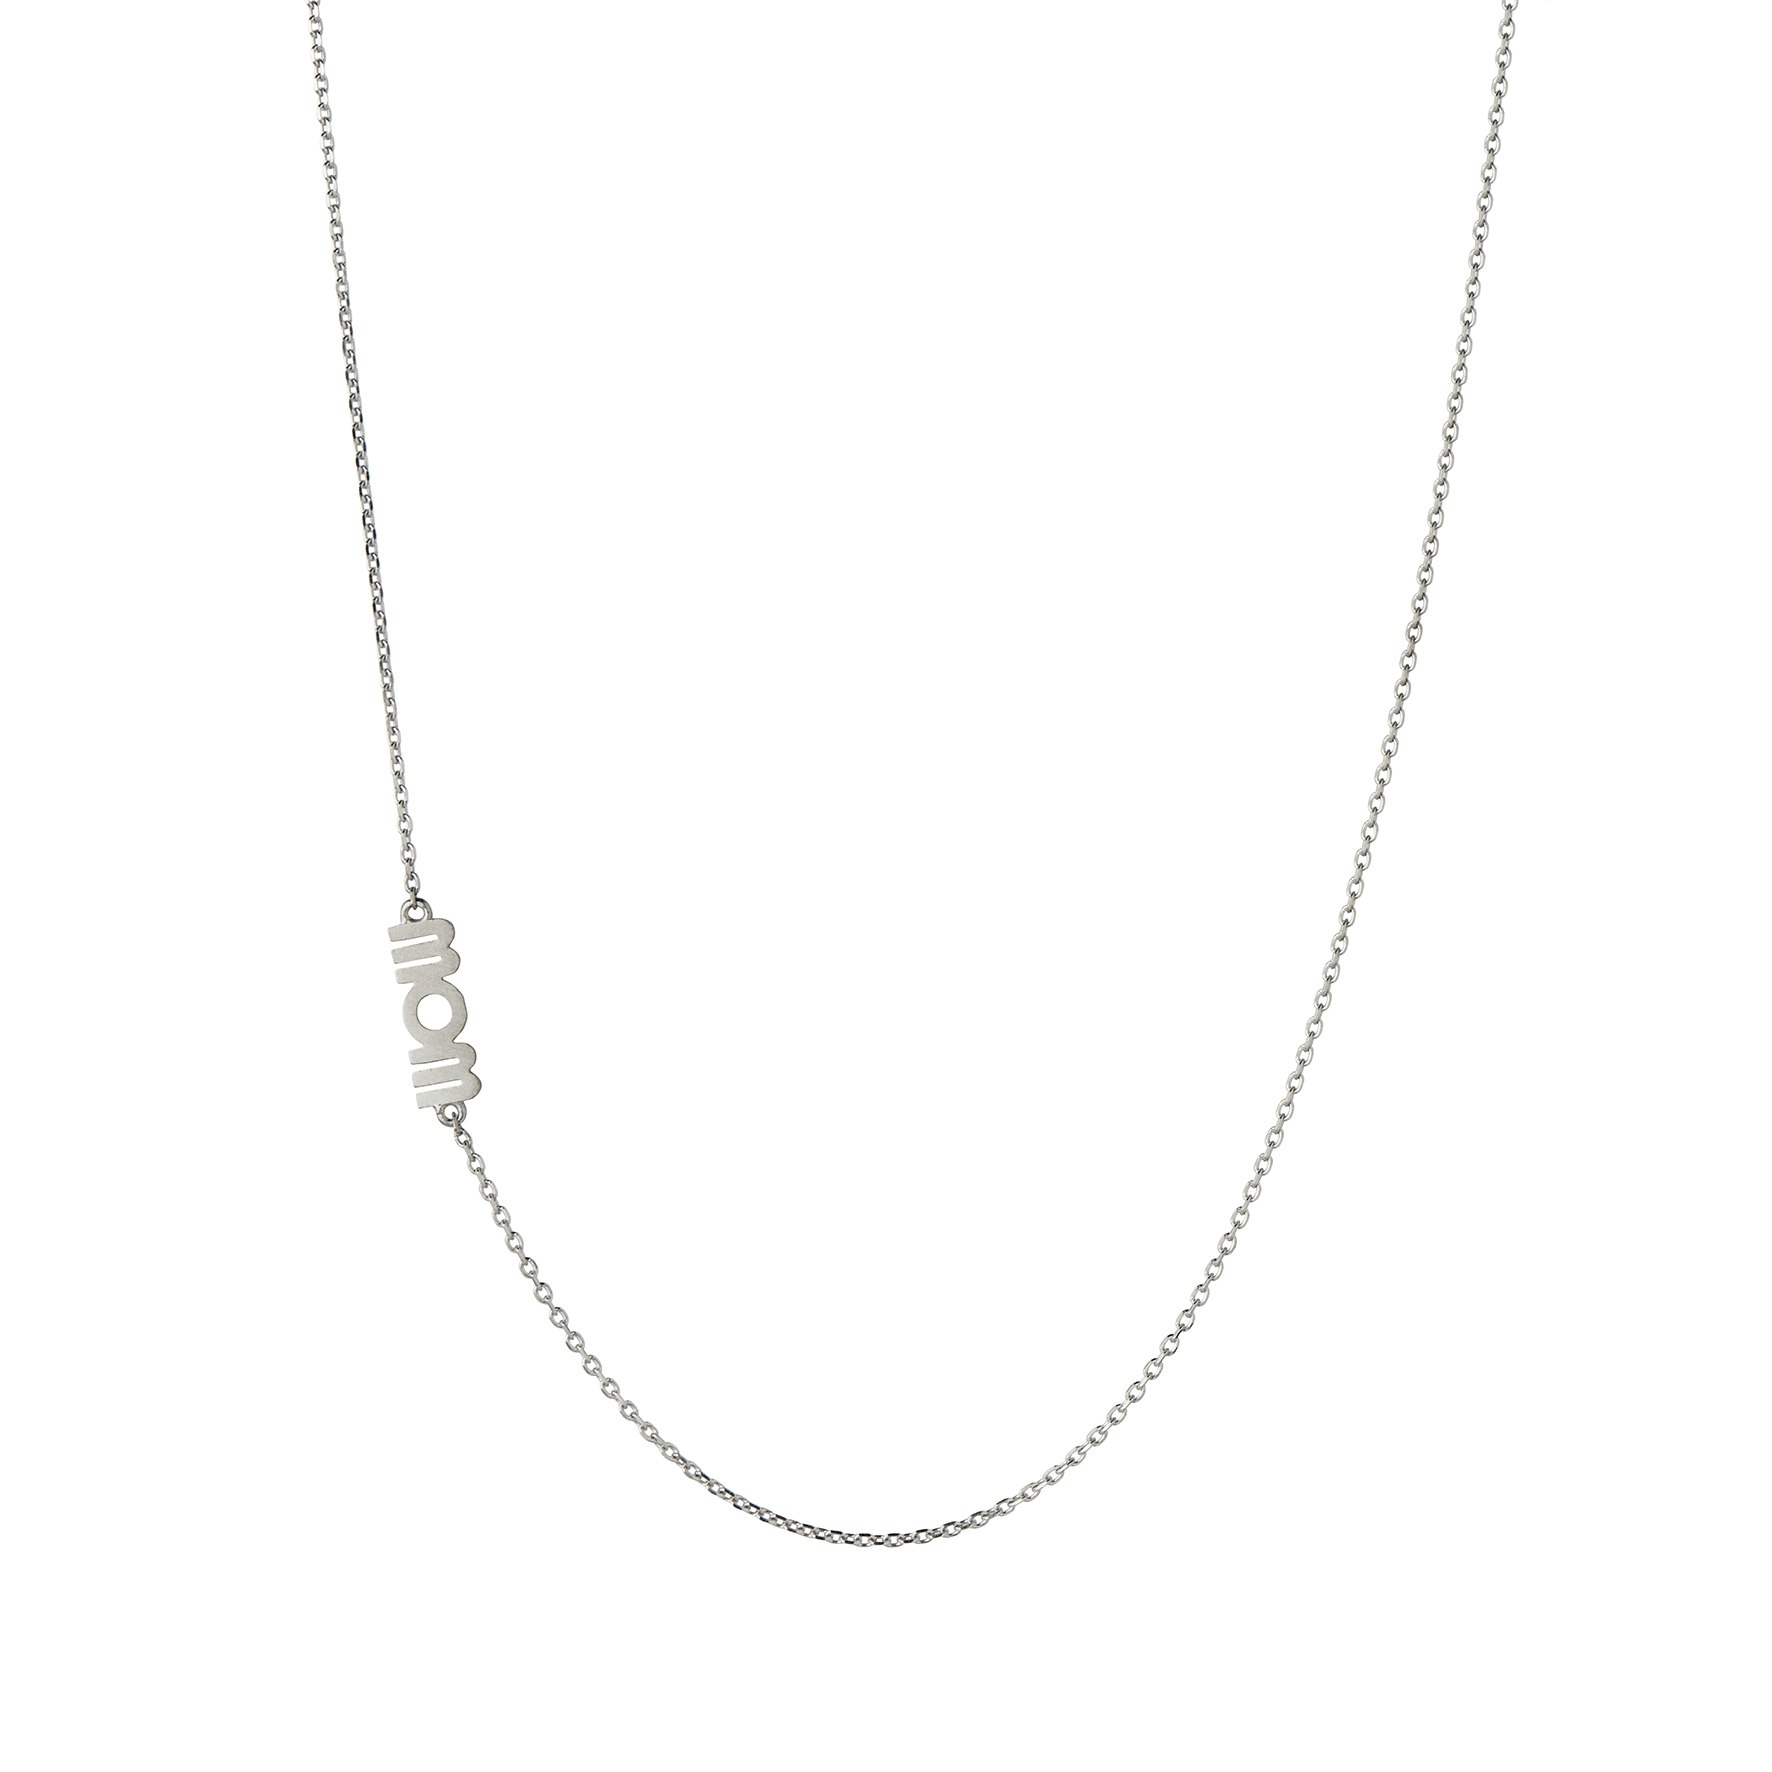 Wow Mom Necklace von STINE A Jewelry in Silber Sterling 925